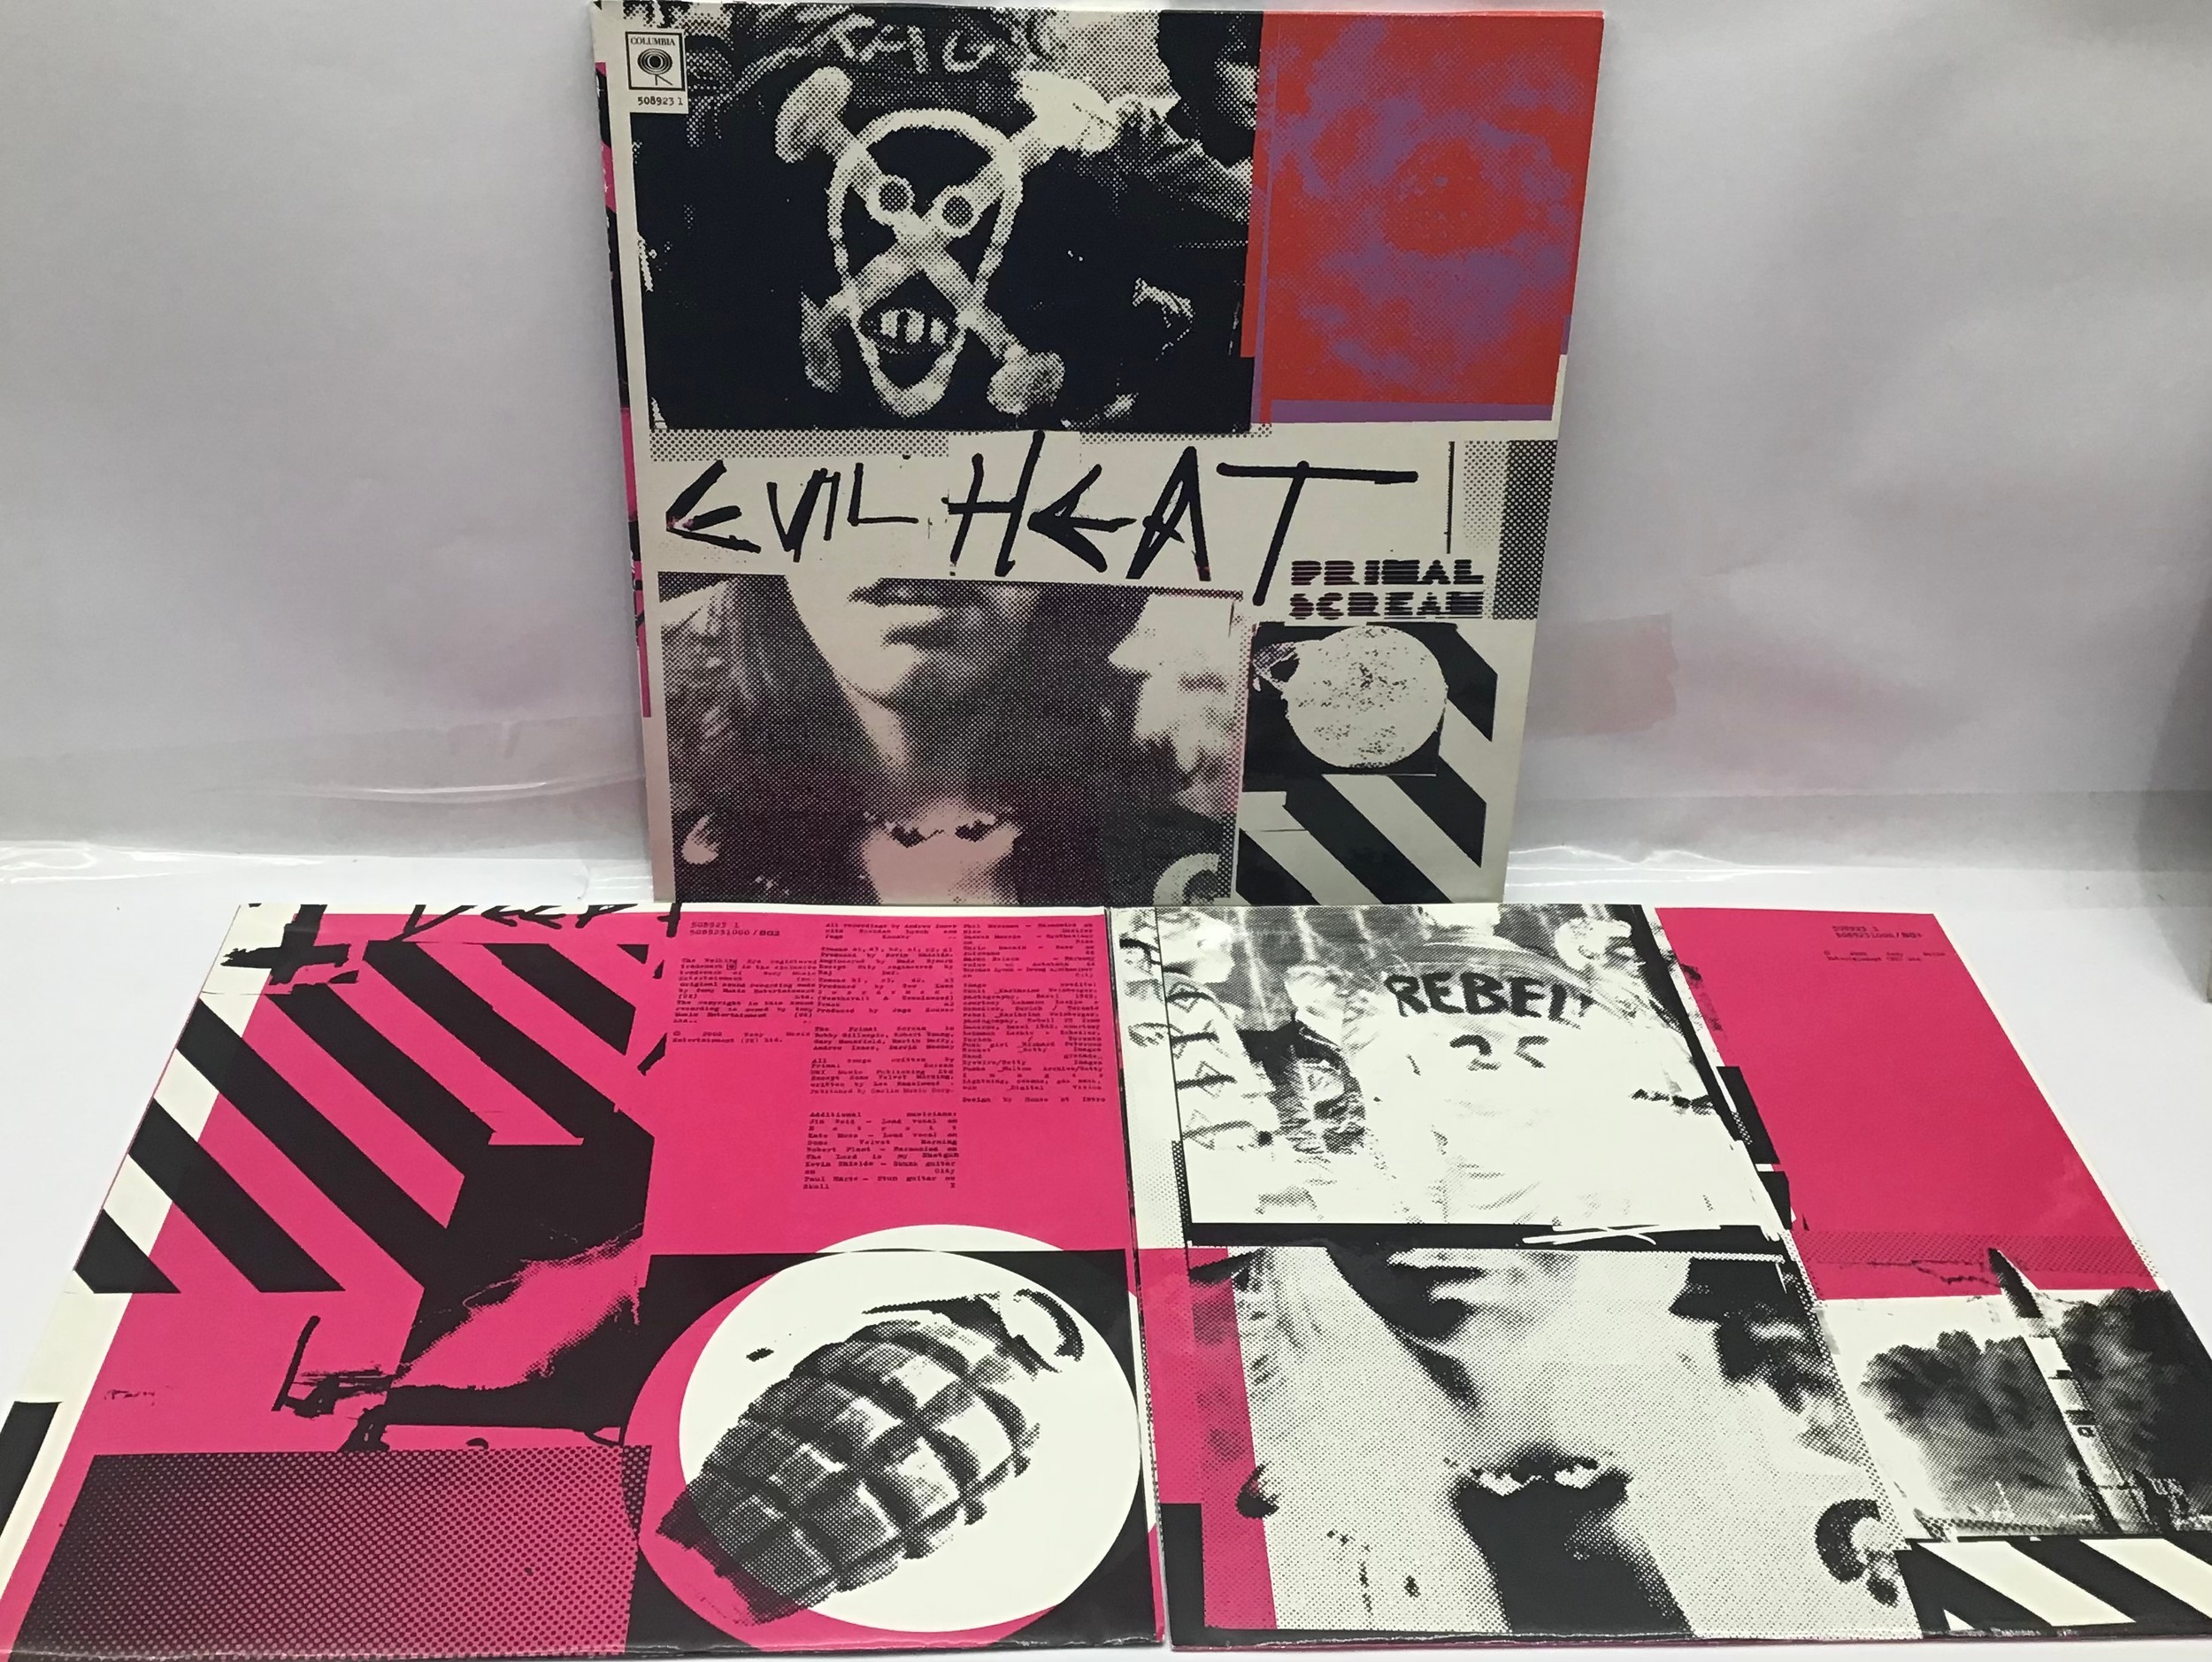 PRIMAL SCREAM ‘EVIL HEAT’ VINYL LP. Double album on Columbia 5089231 from 2002 complete with